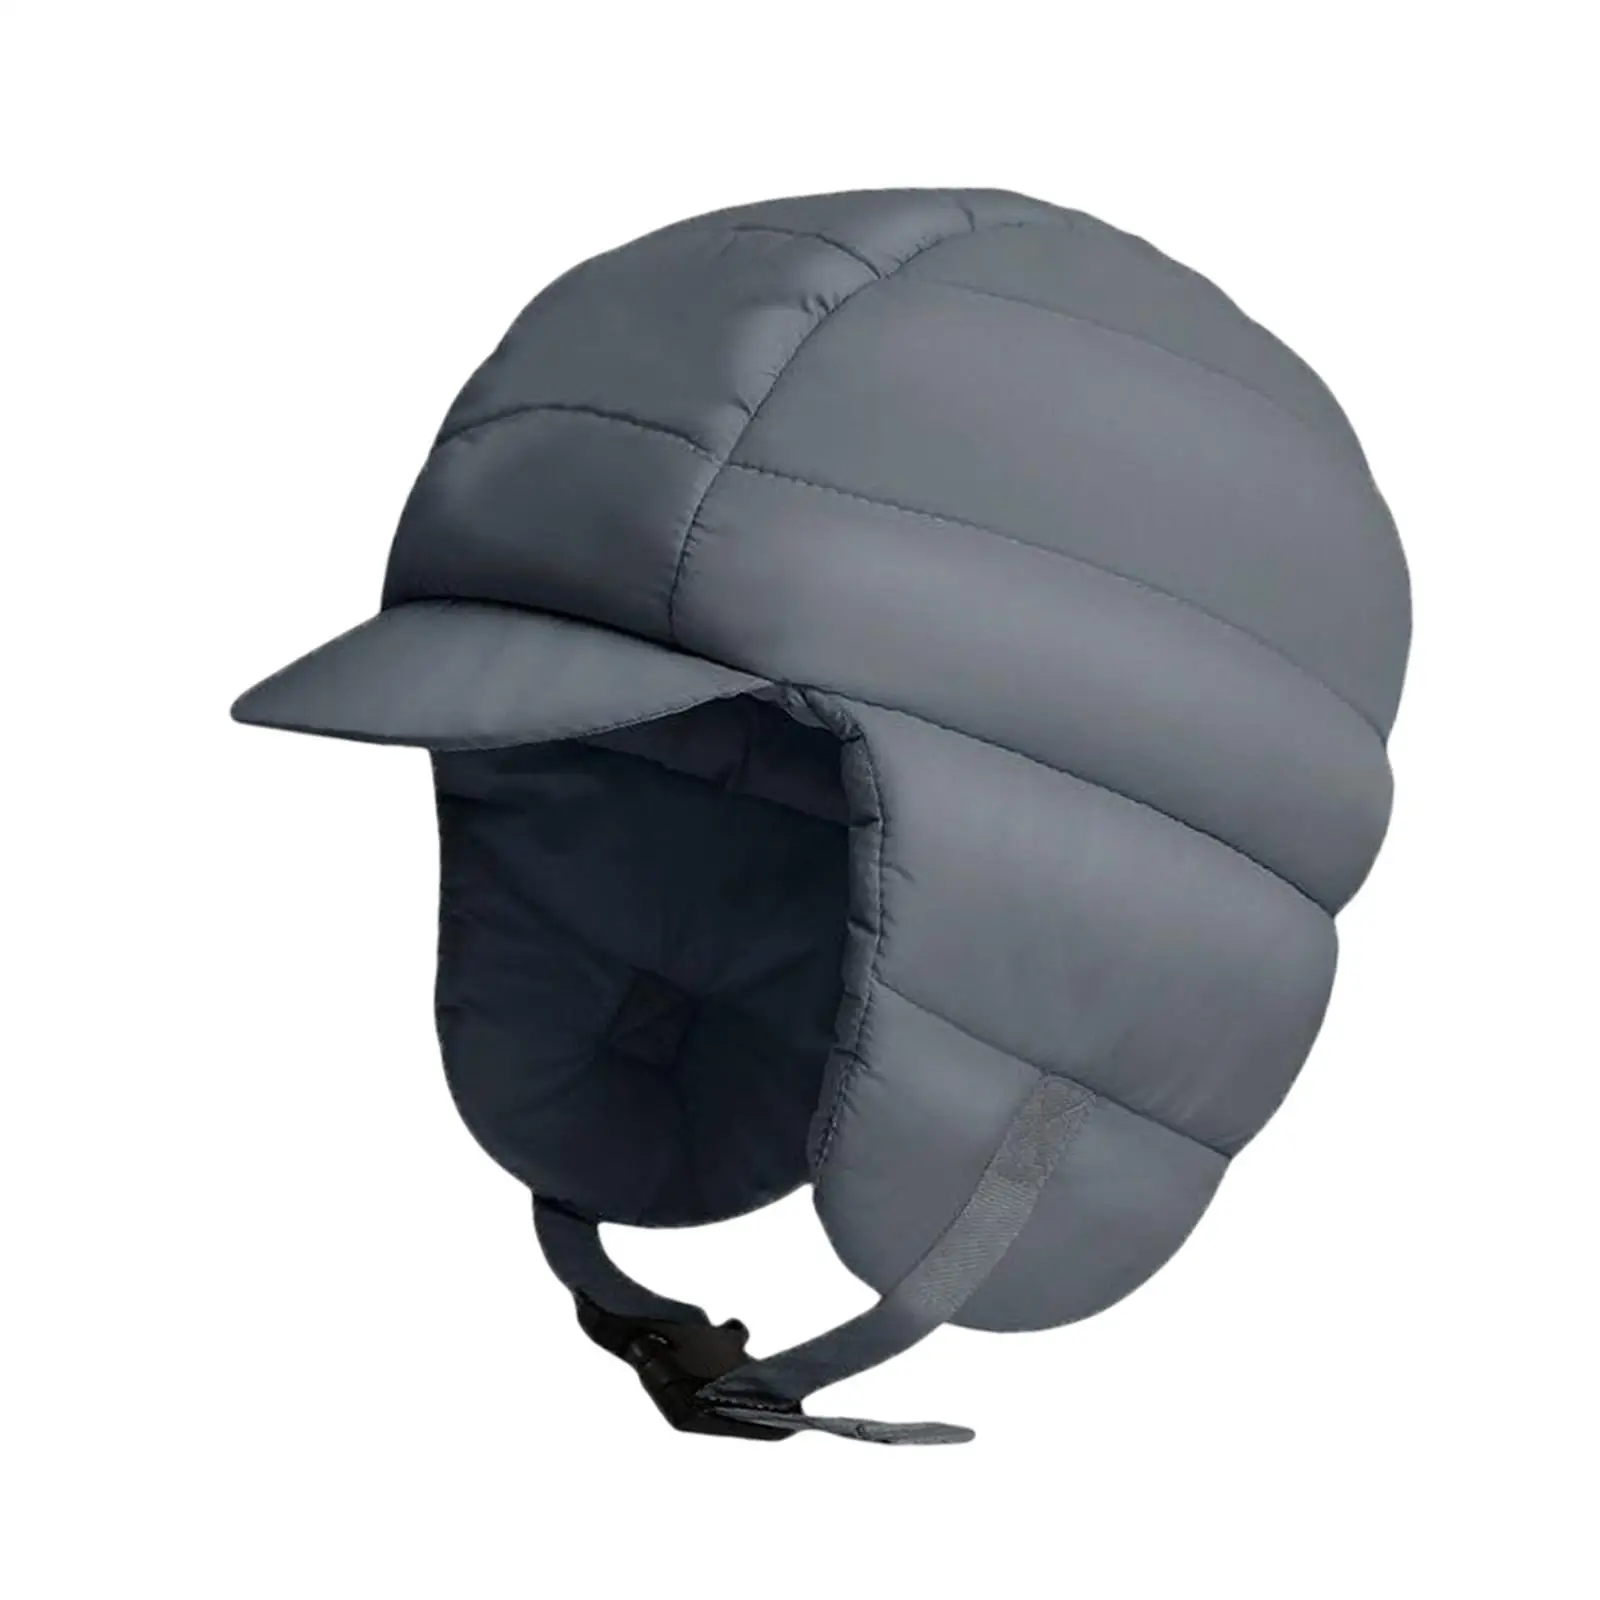 Trooper Trapper Hat Ski Brim Hat with Ear Flaps Unisex Waterproof Winter Baseball Cap for Skiing Biking Climbing Camping Outdoor